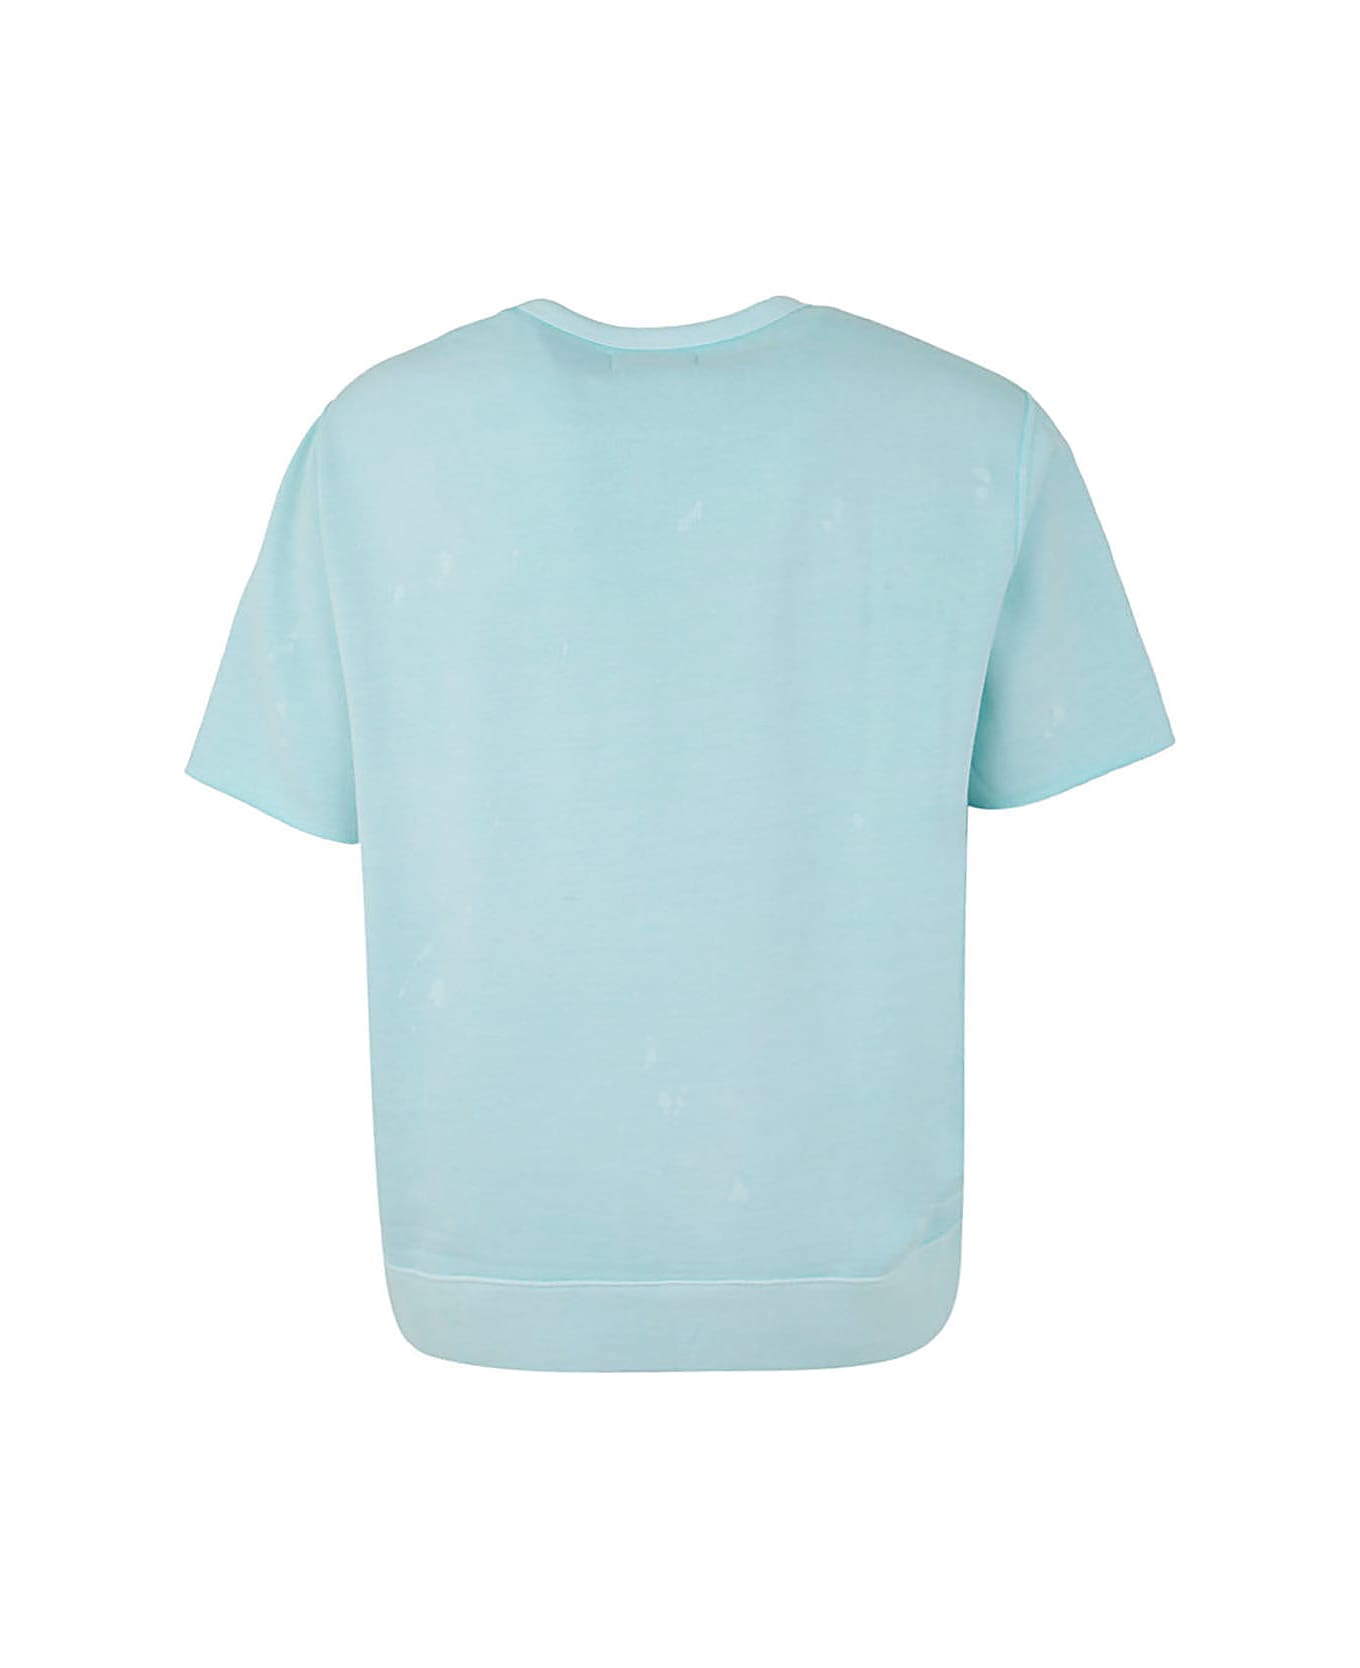 Polo Ralph Lauren Sscnm5 Short Sleeve Sweatshirt - Island Aqua